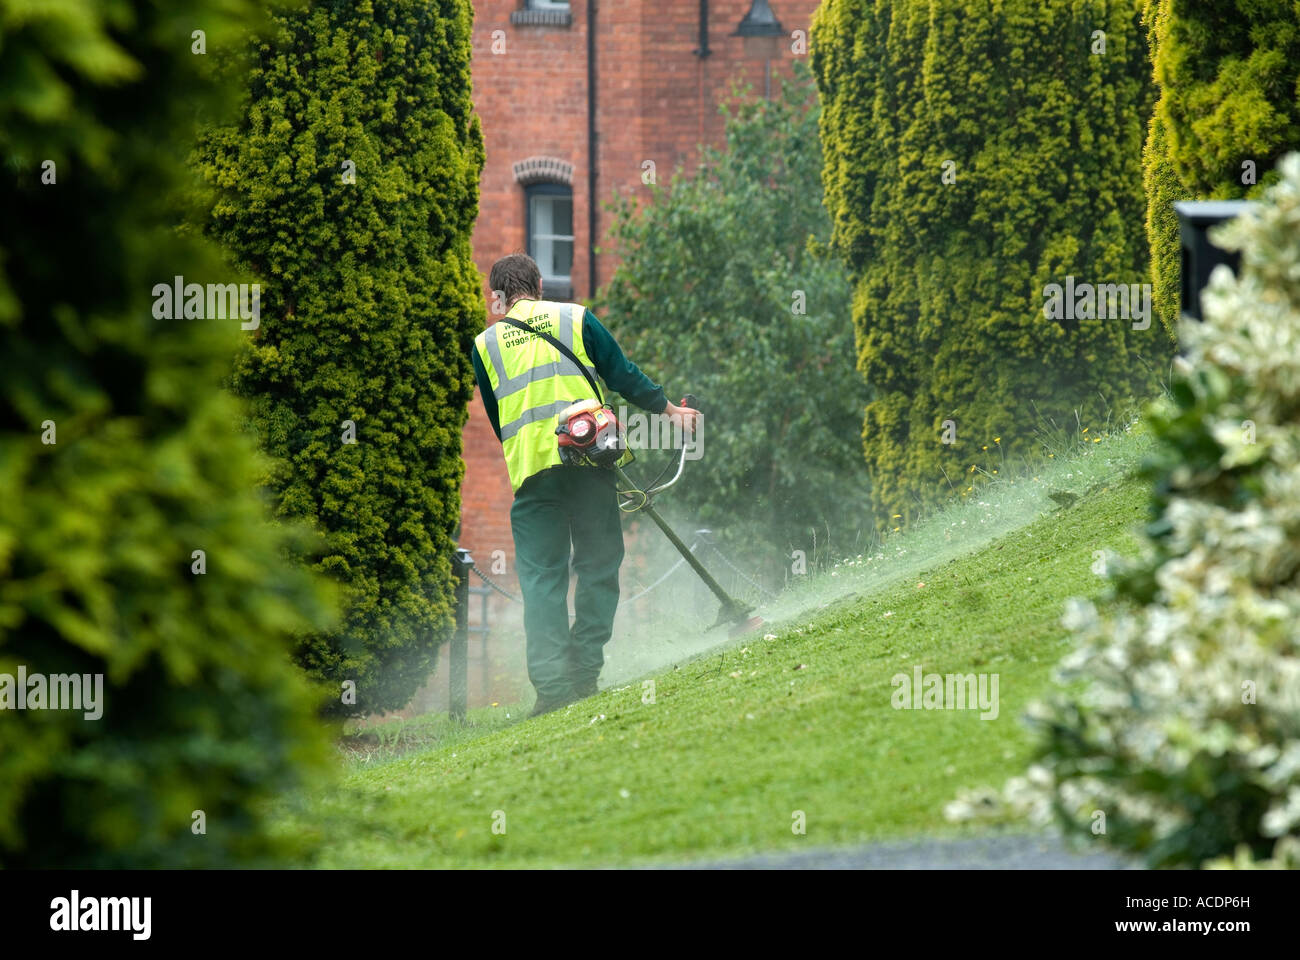 Council gardener using strimmer in public park Stock Photo